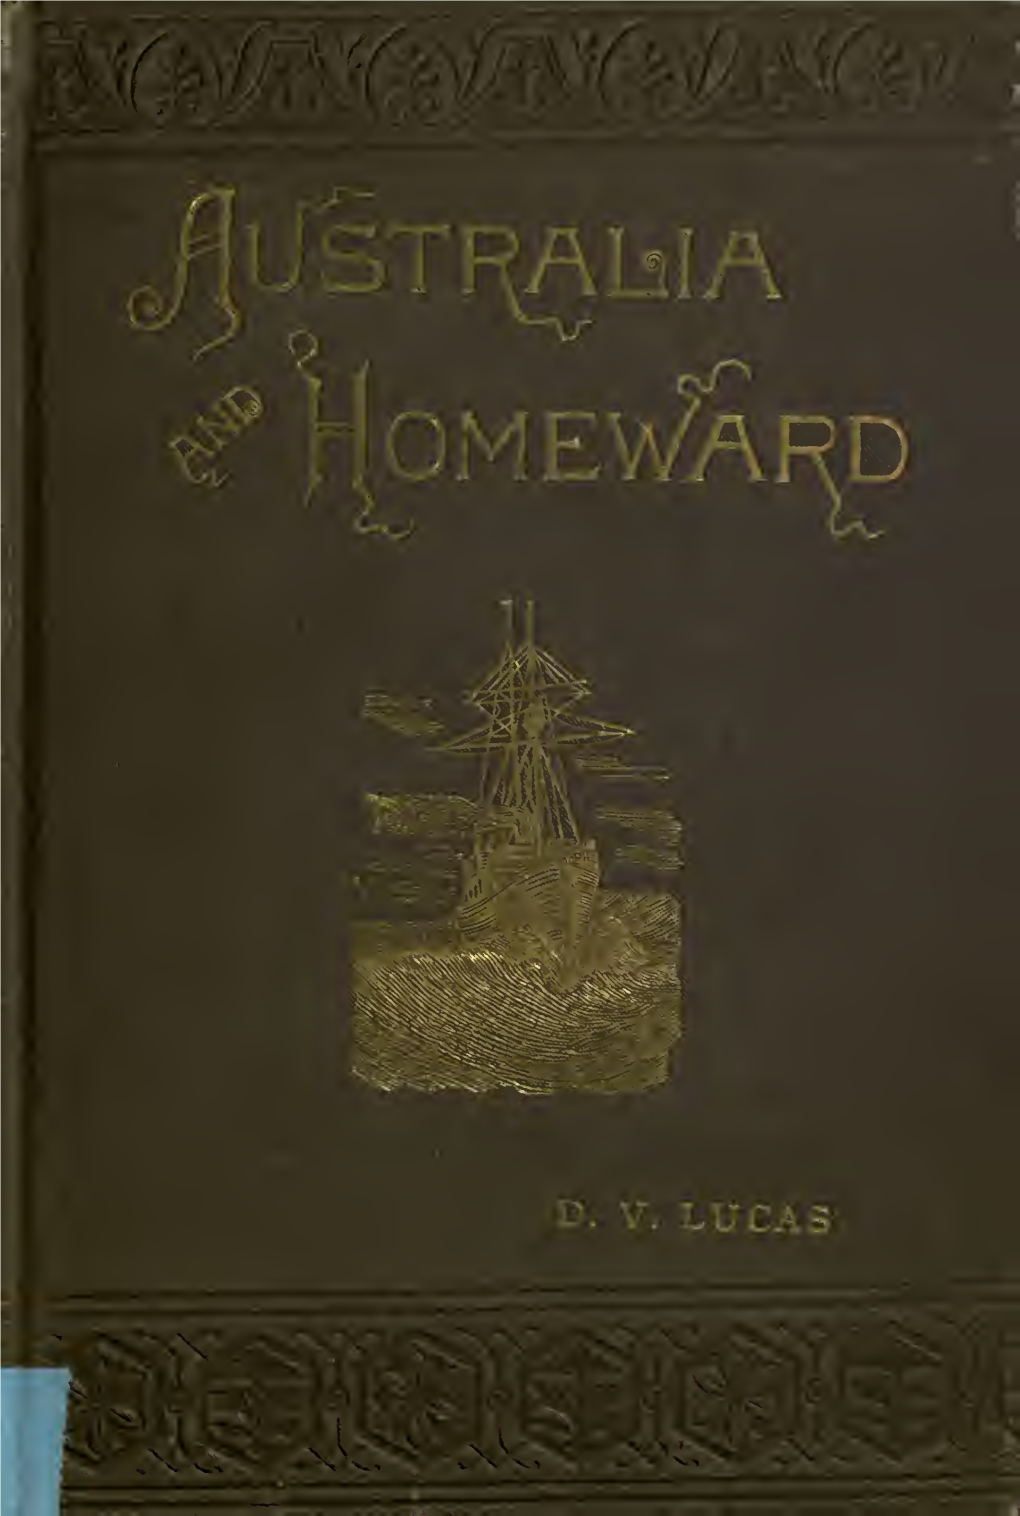 Australia and Homeward (1888)